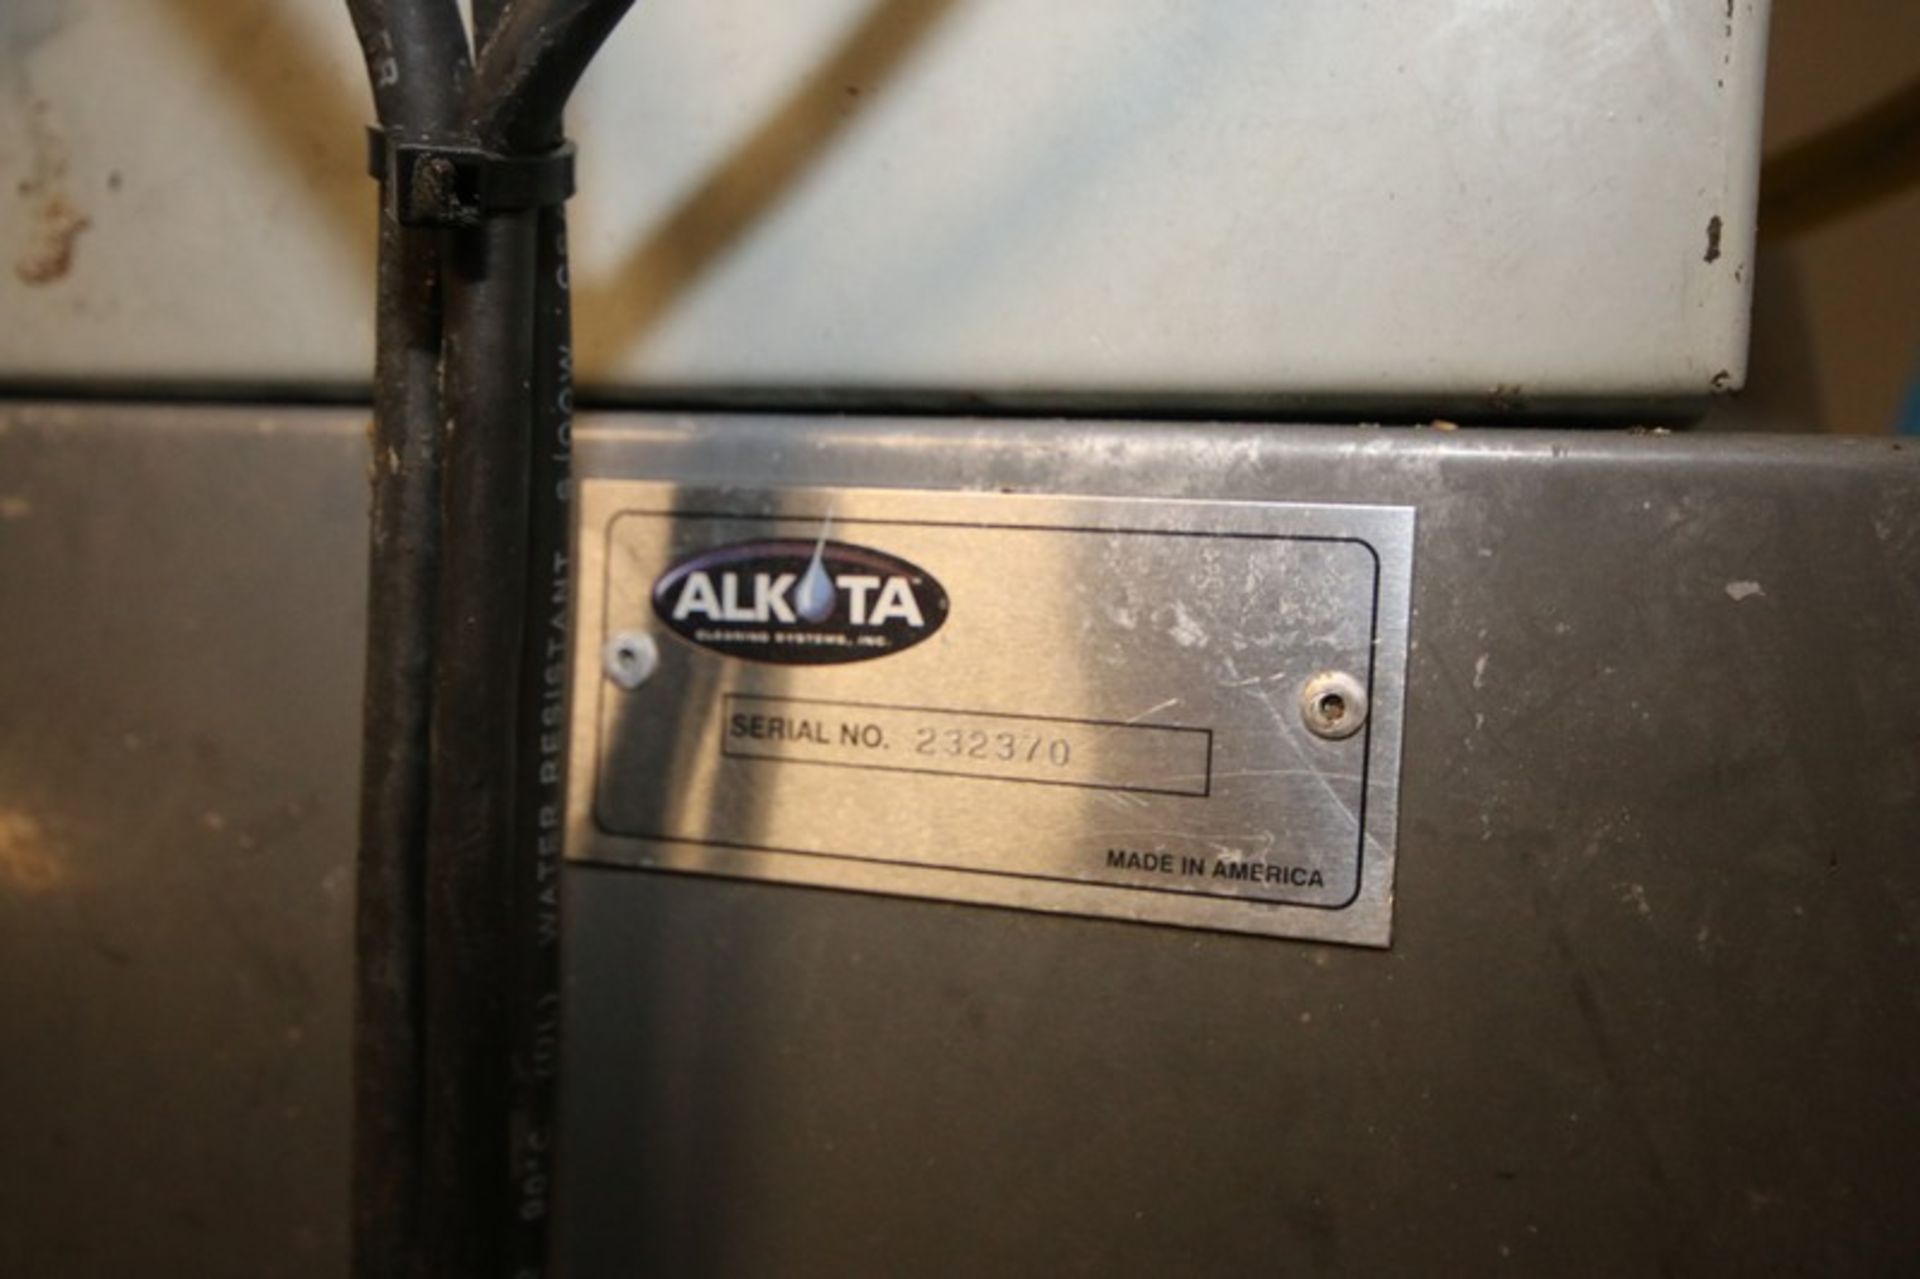 Alkota Xtreme Portable Hot Pressure Washer, Model 216X4X, SN 232370, 115/230V Electric & Propane - Image 6 of 6